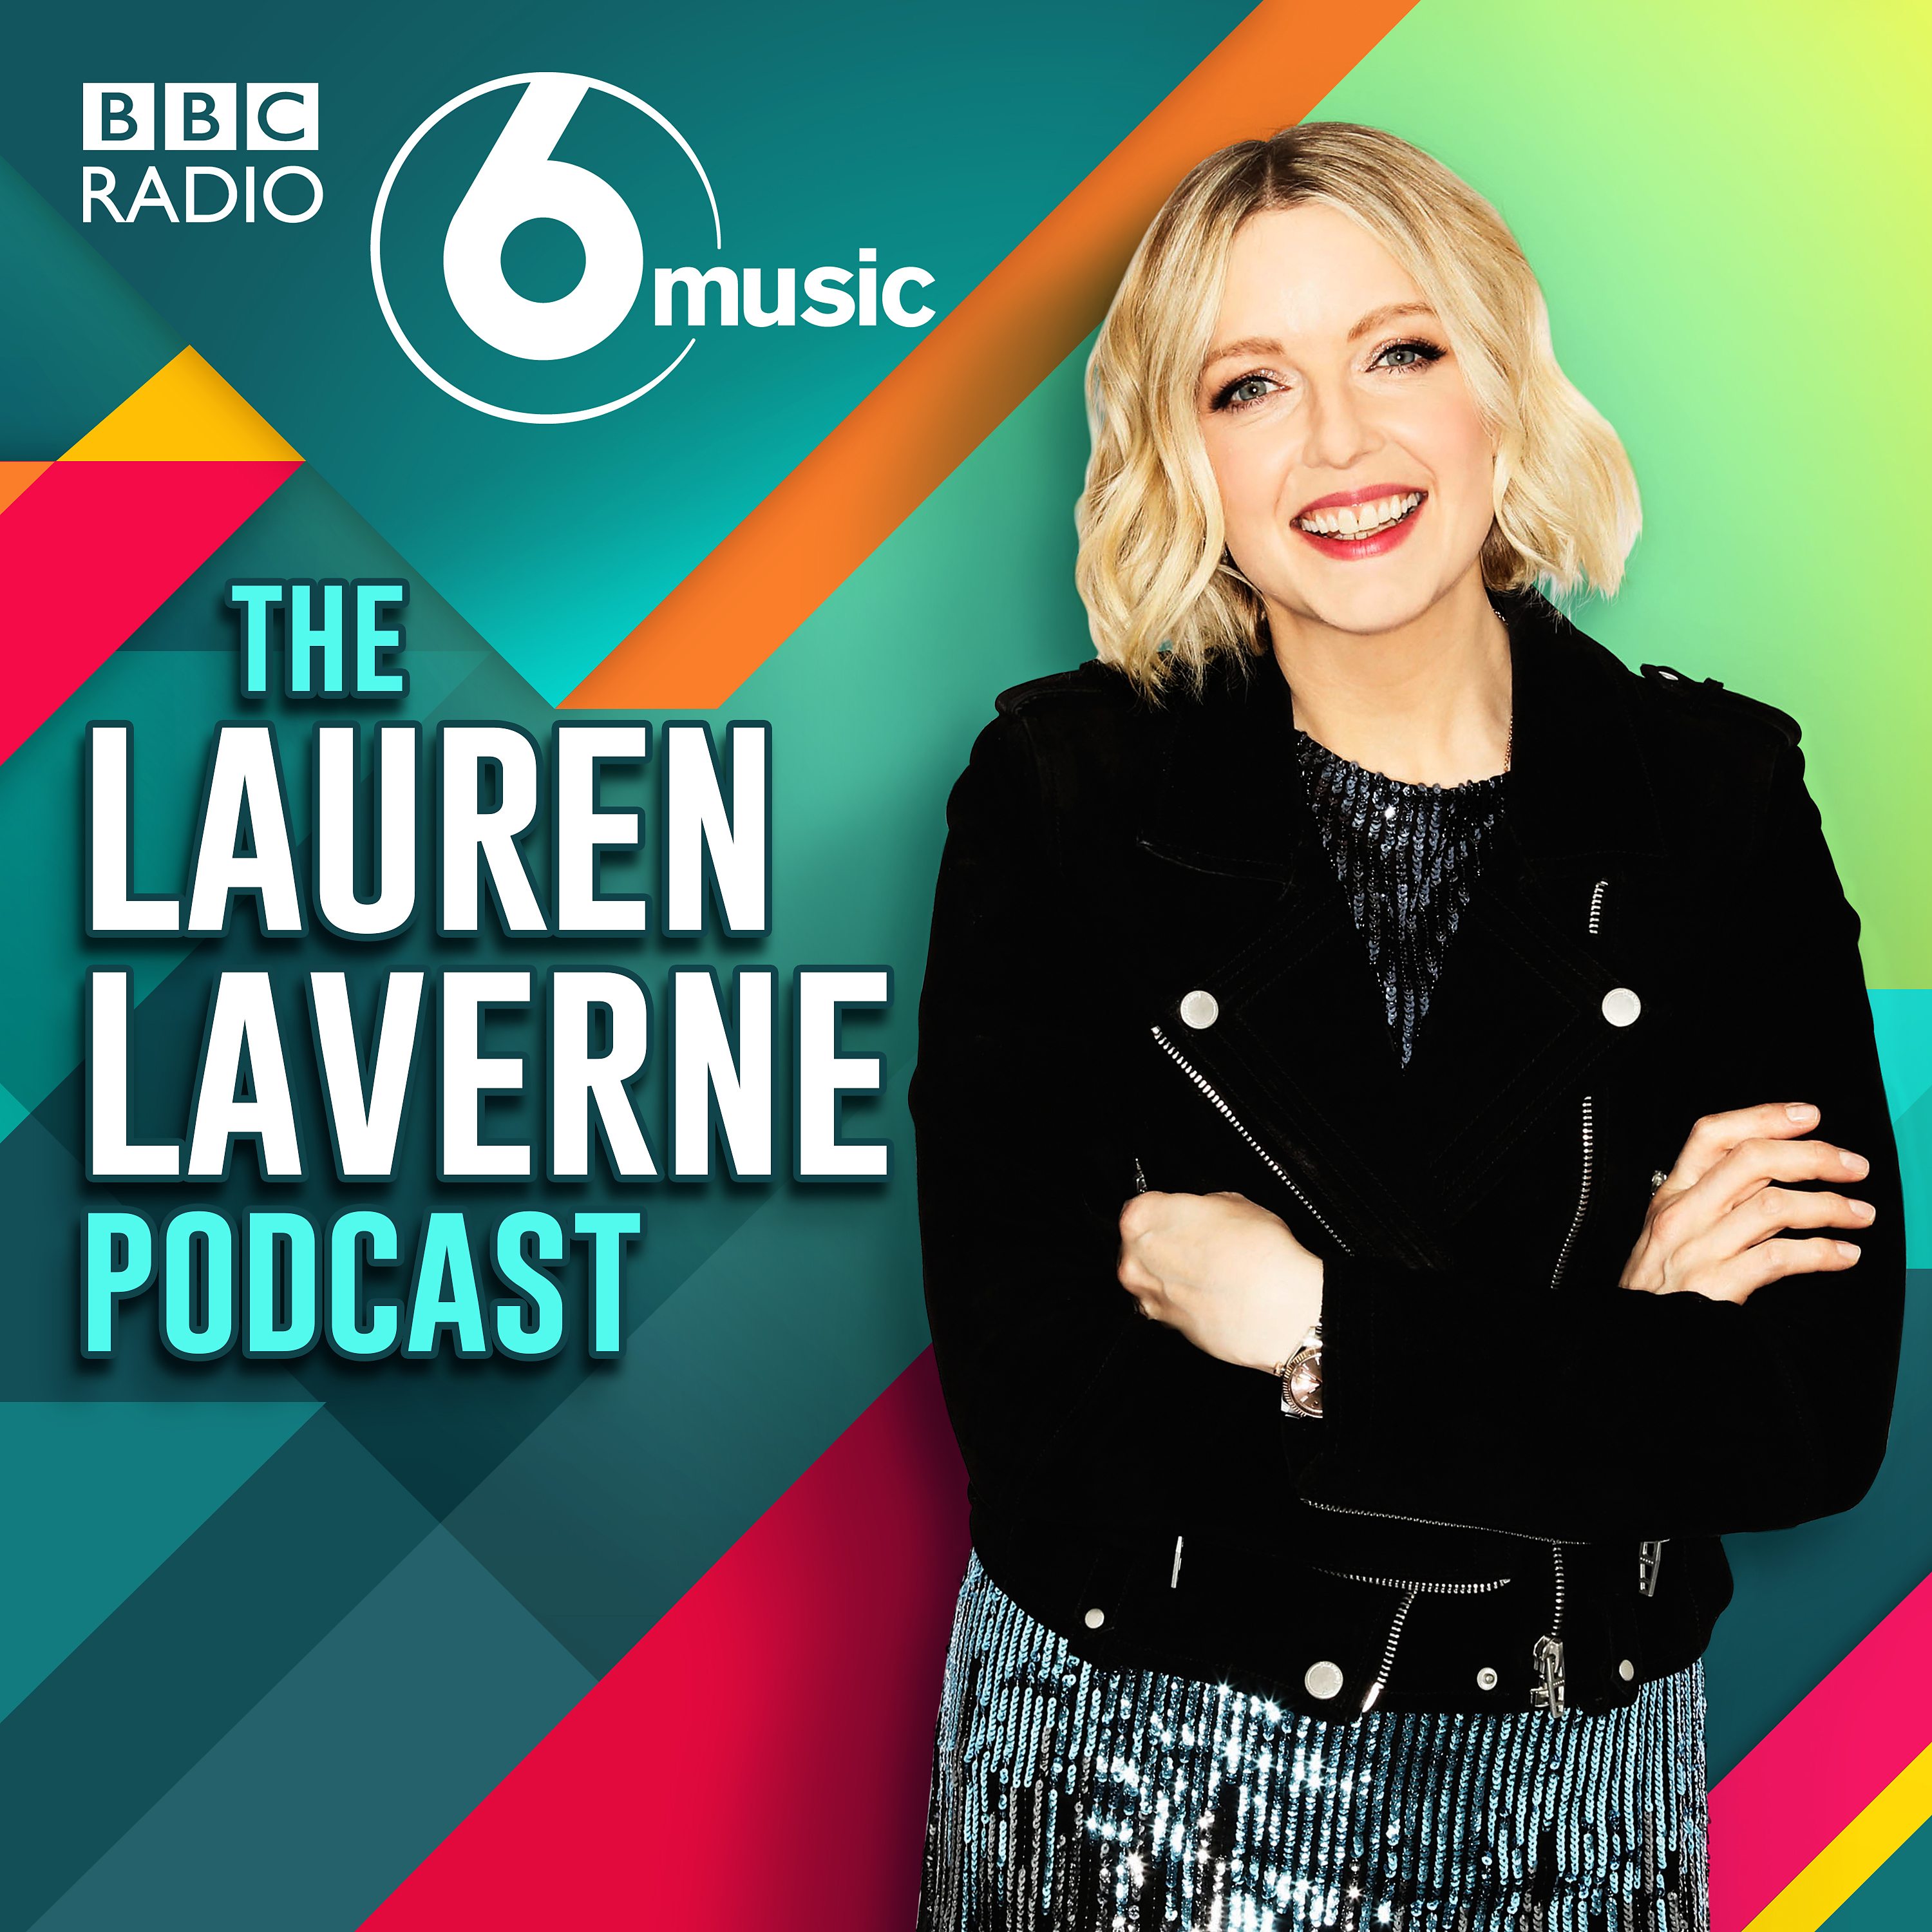 The Lauren Laverne Podcast